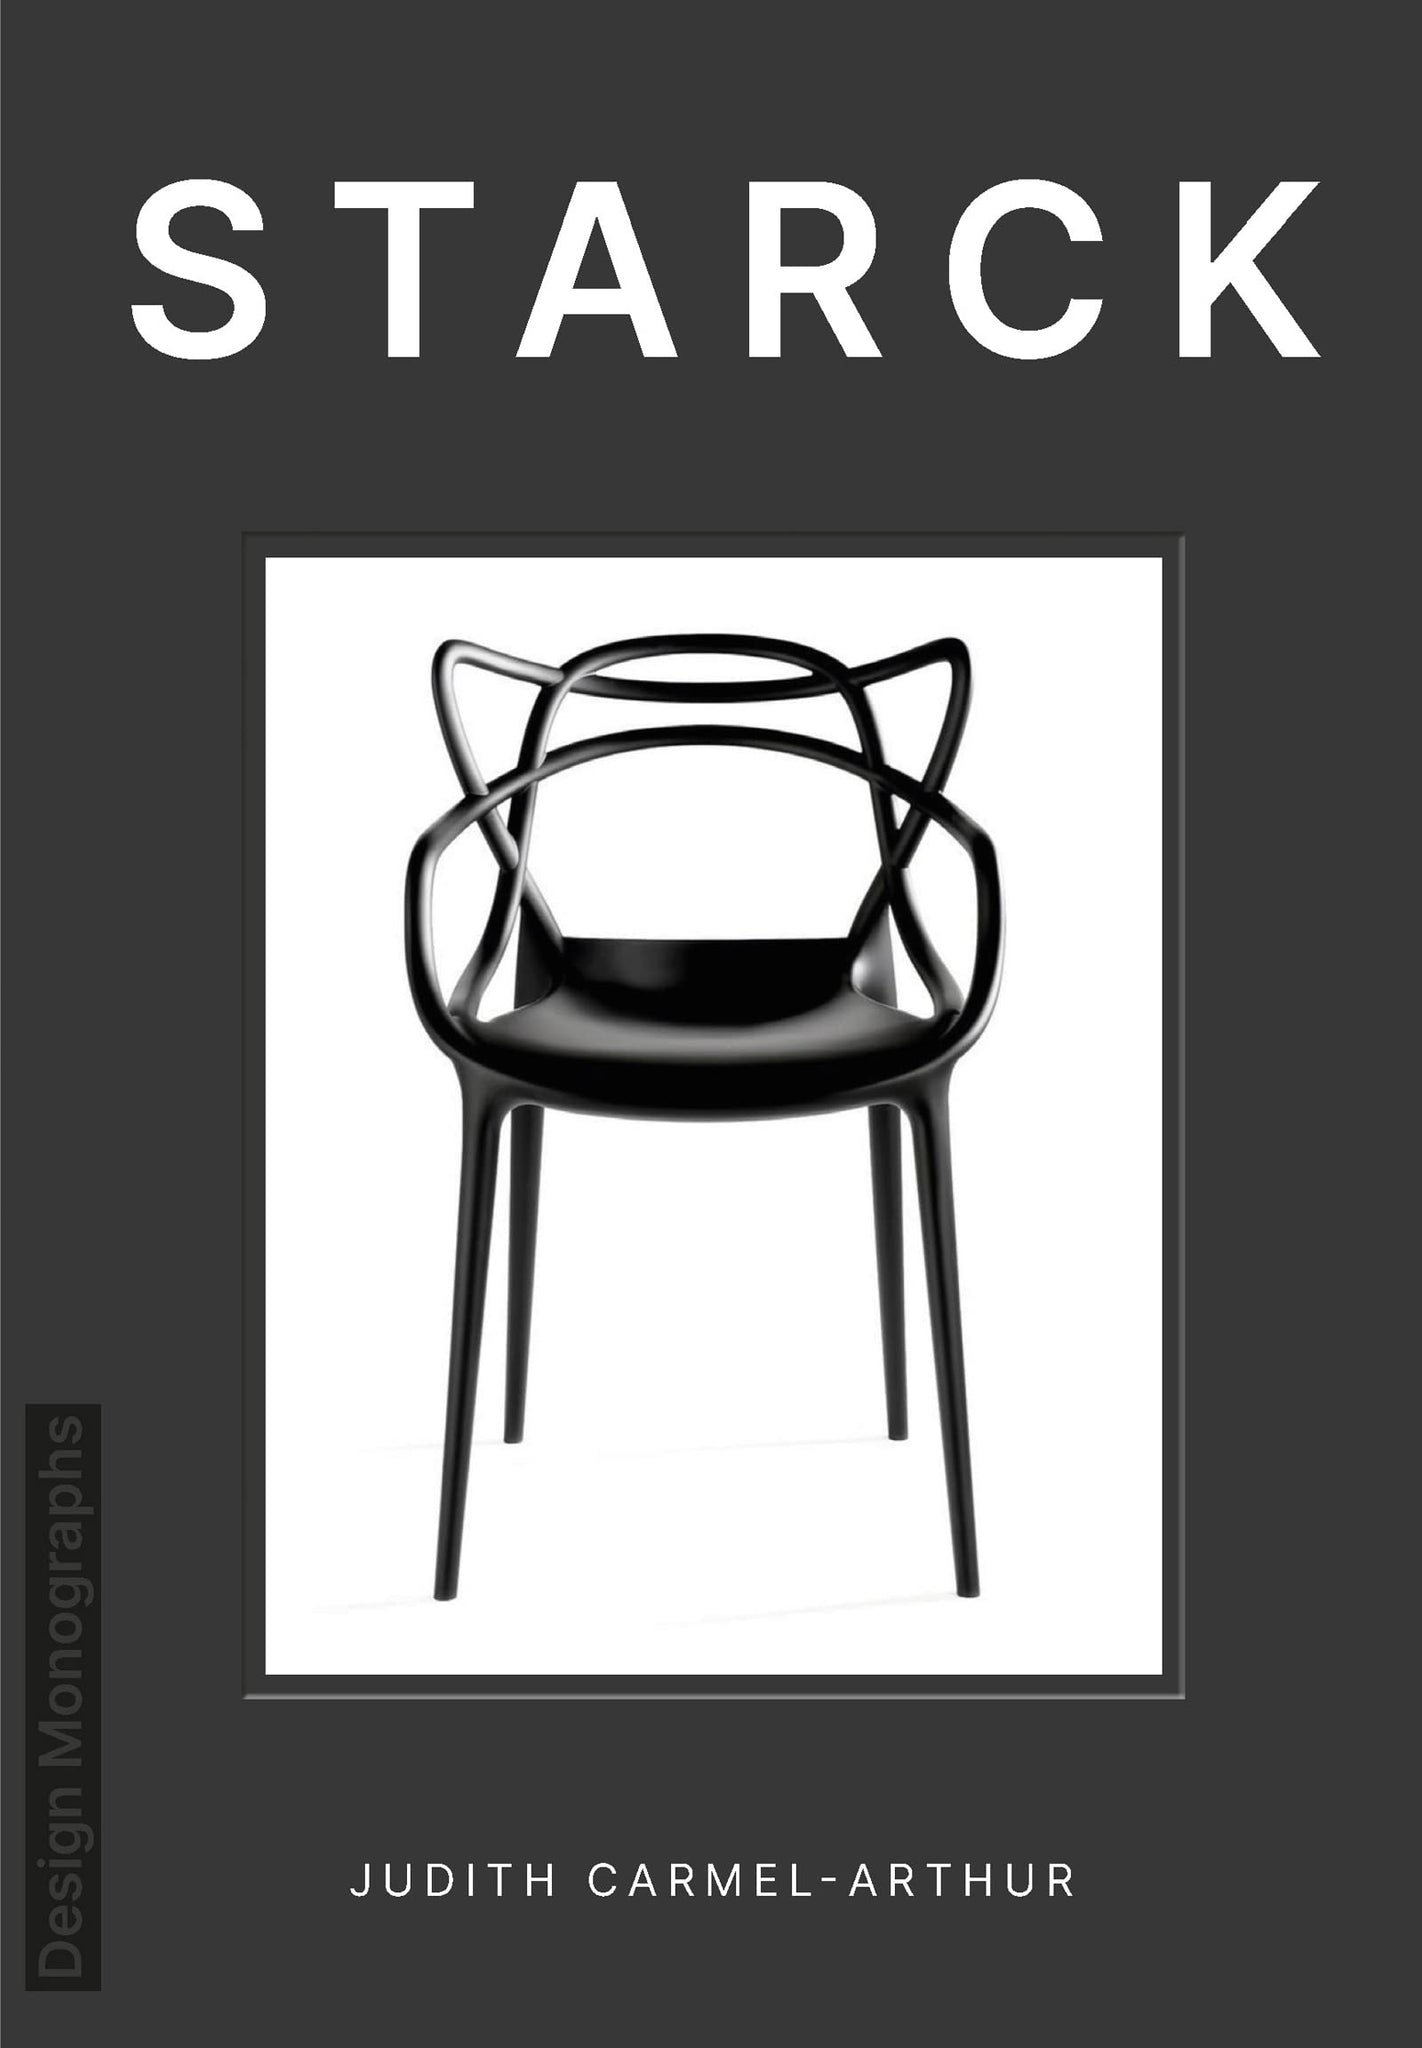 Design Monograph: Starck